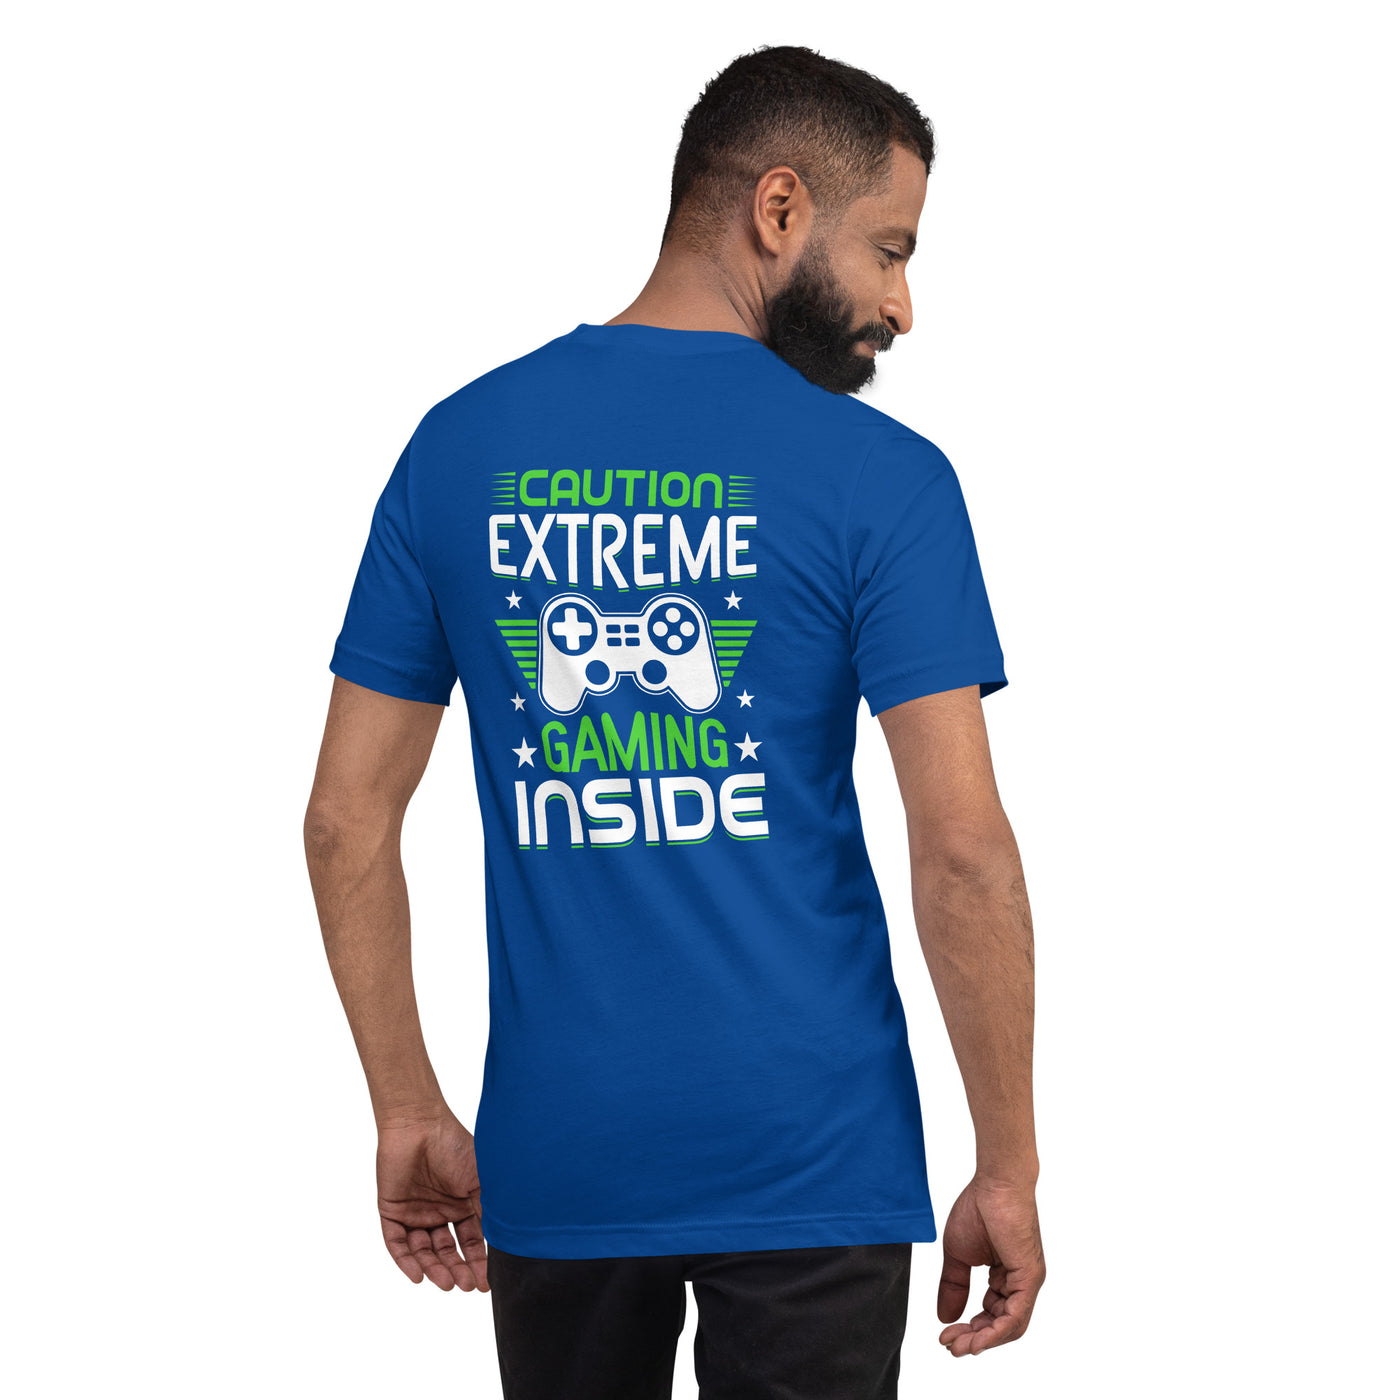 Caution extreme gaming inside - Unisex t-shirt ( Back Print )